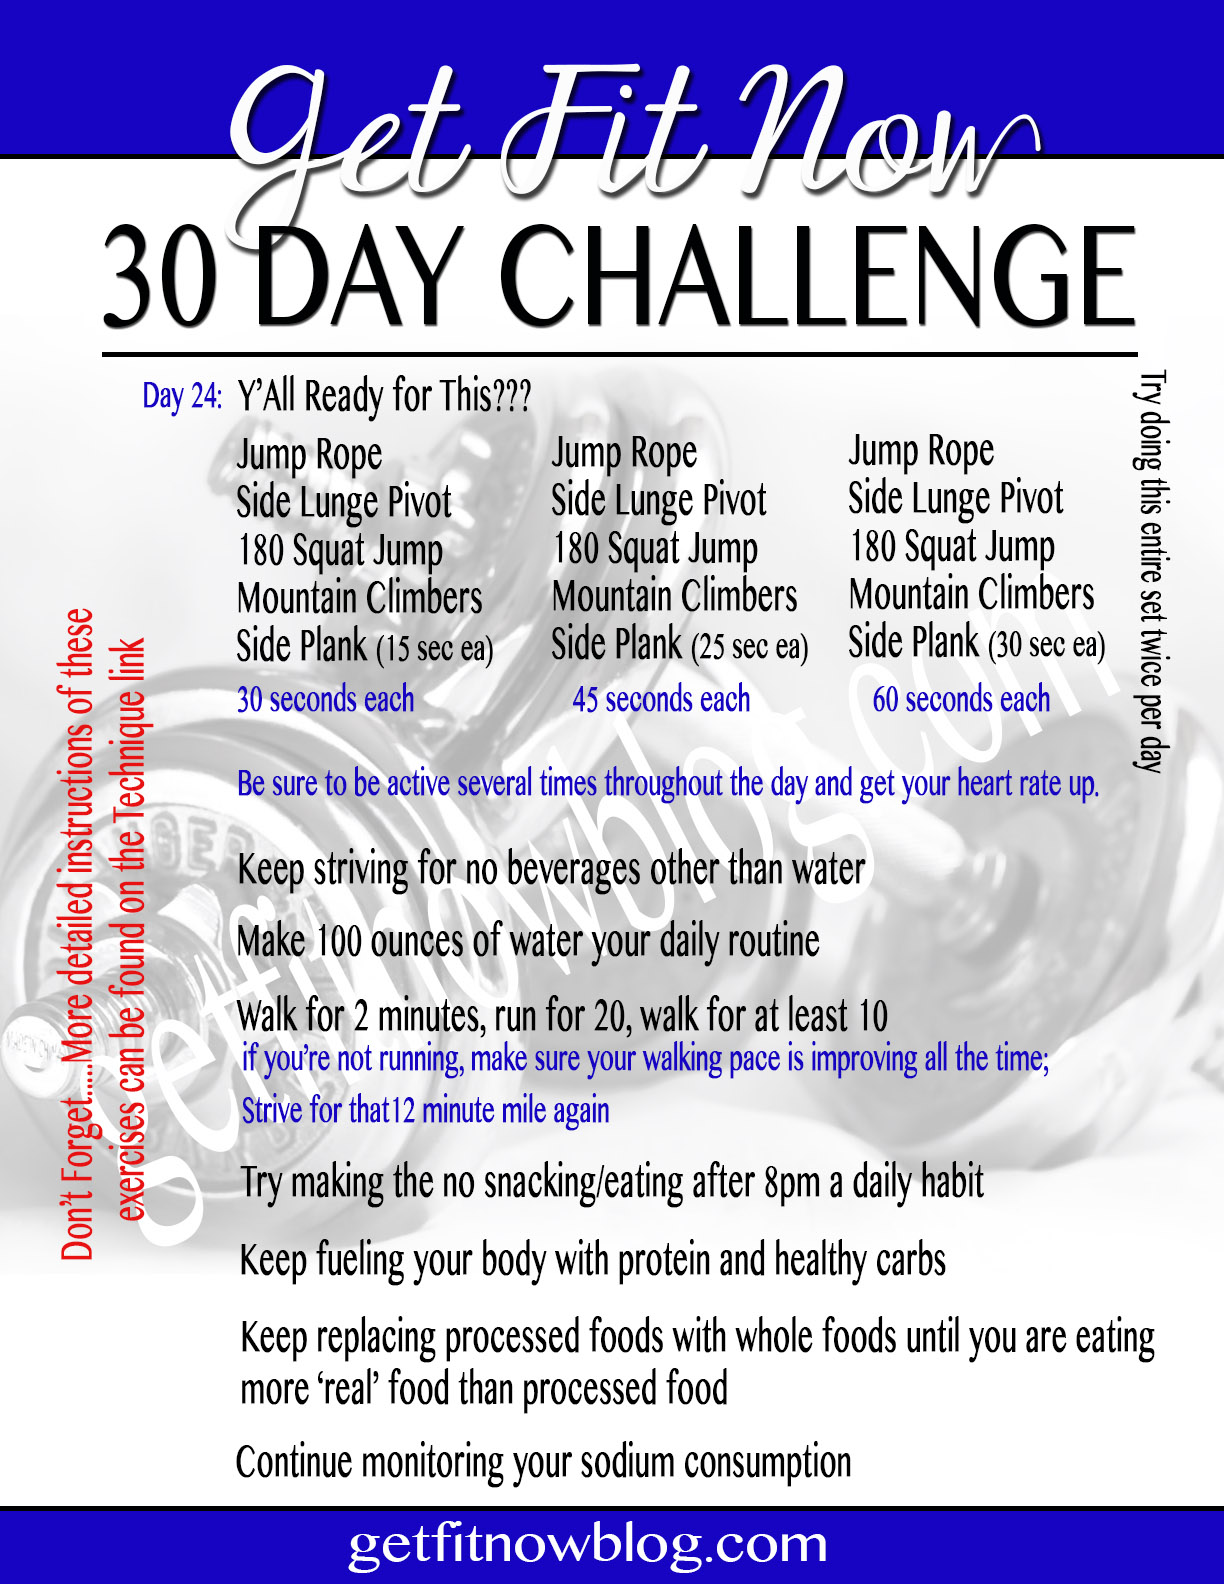 day 24 challenge